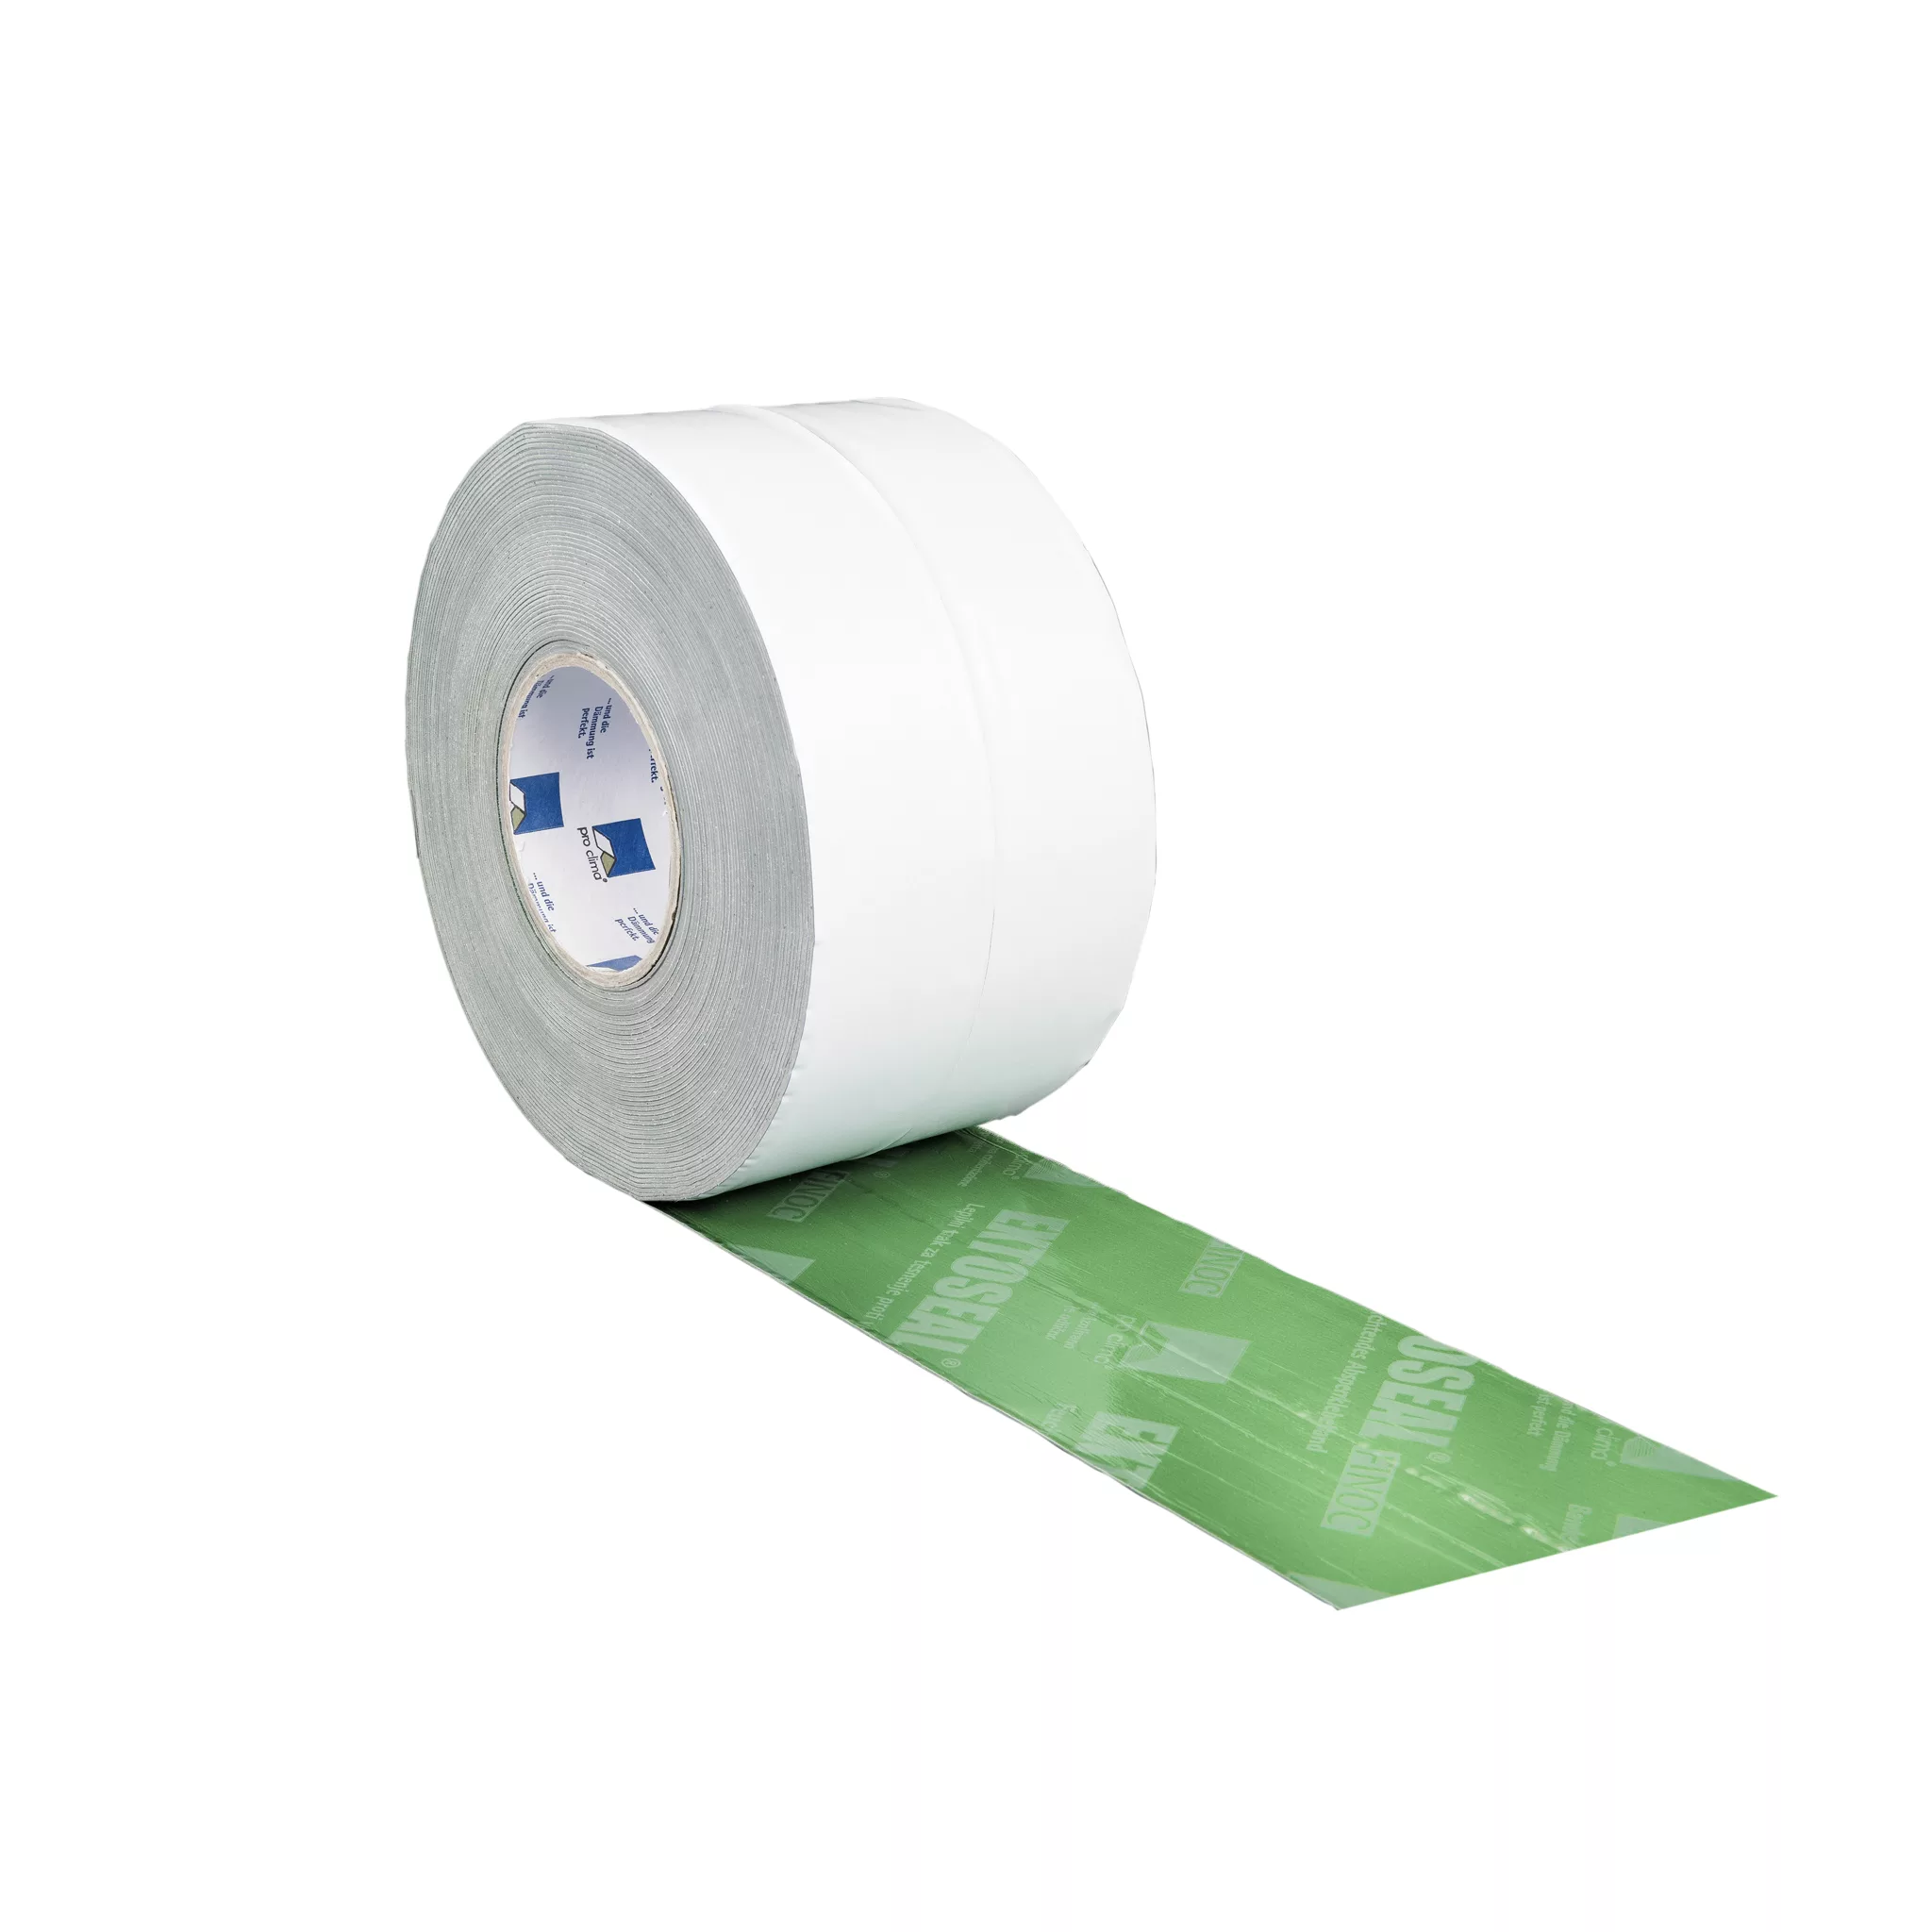 Pro Clima Extoseal Finoc air tightness tape